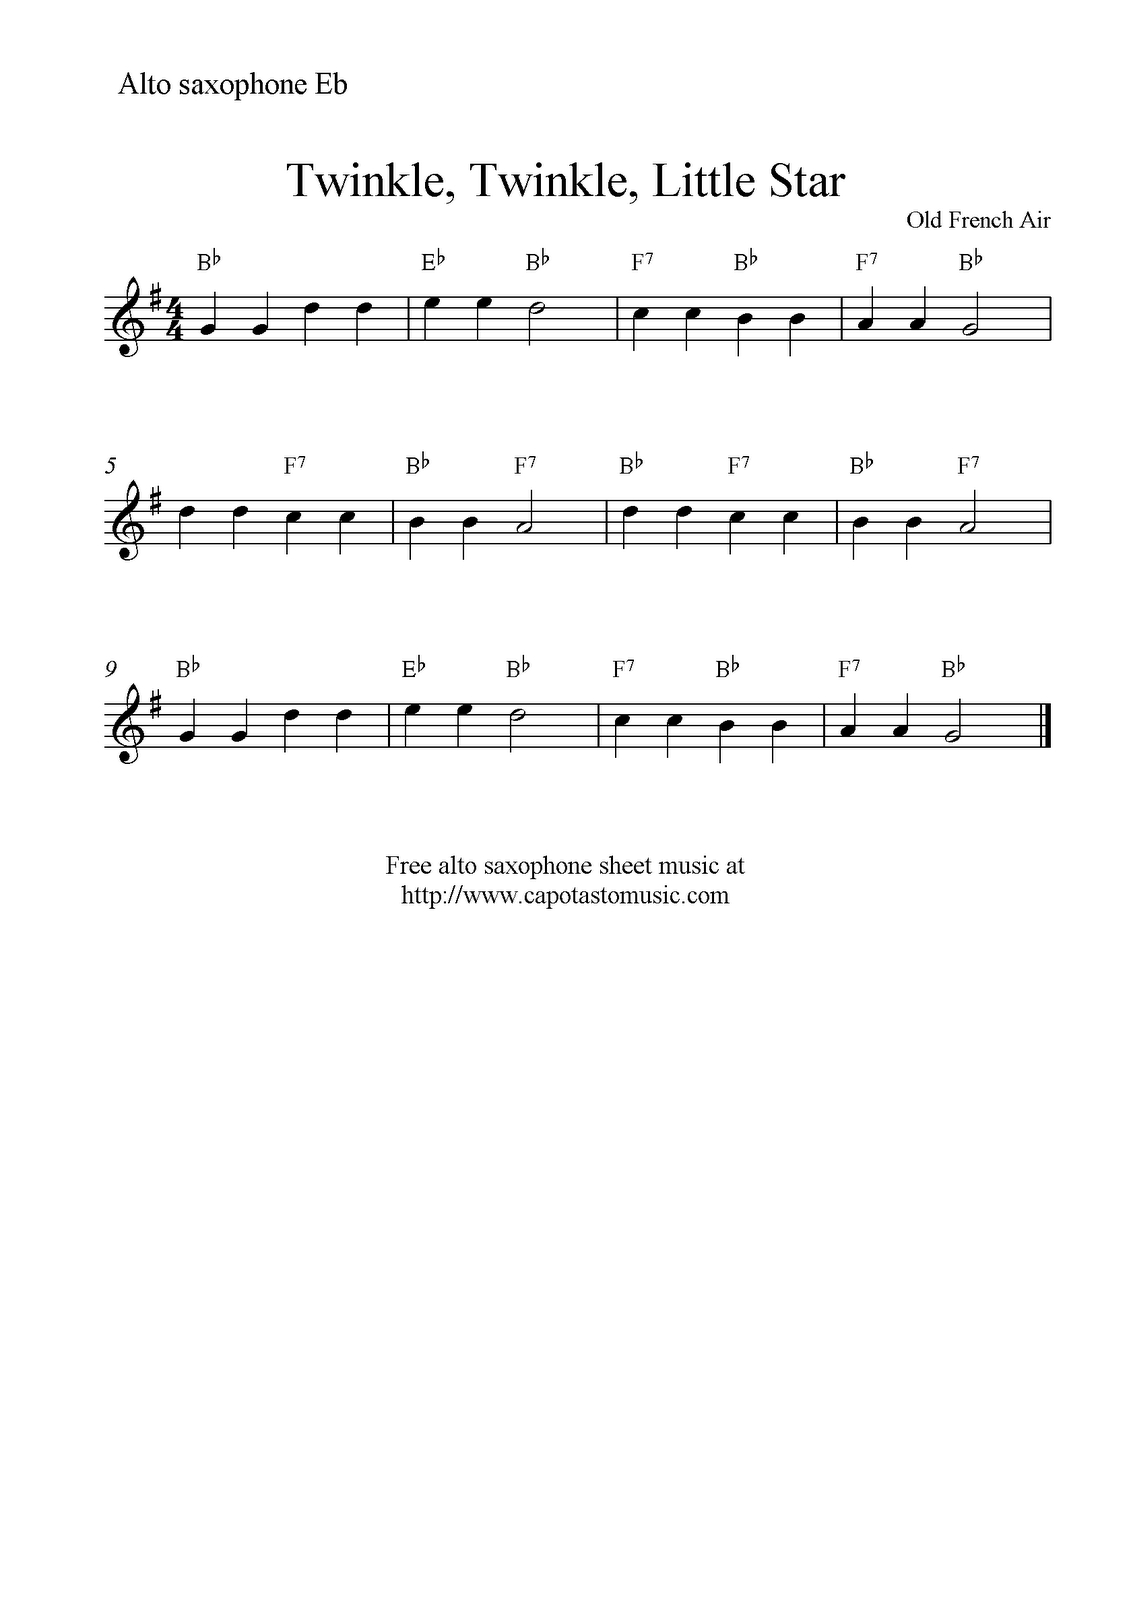 Free Sheet Music Scores: Twinkle, Twinkle, Little Star, Free Alto - Free Printable Alto Saxophone Sheet Music